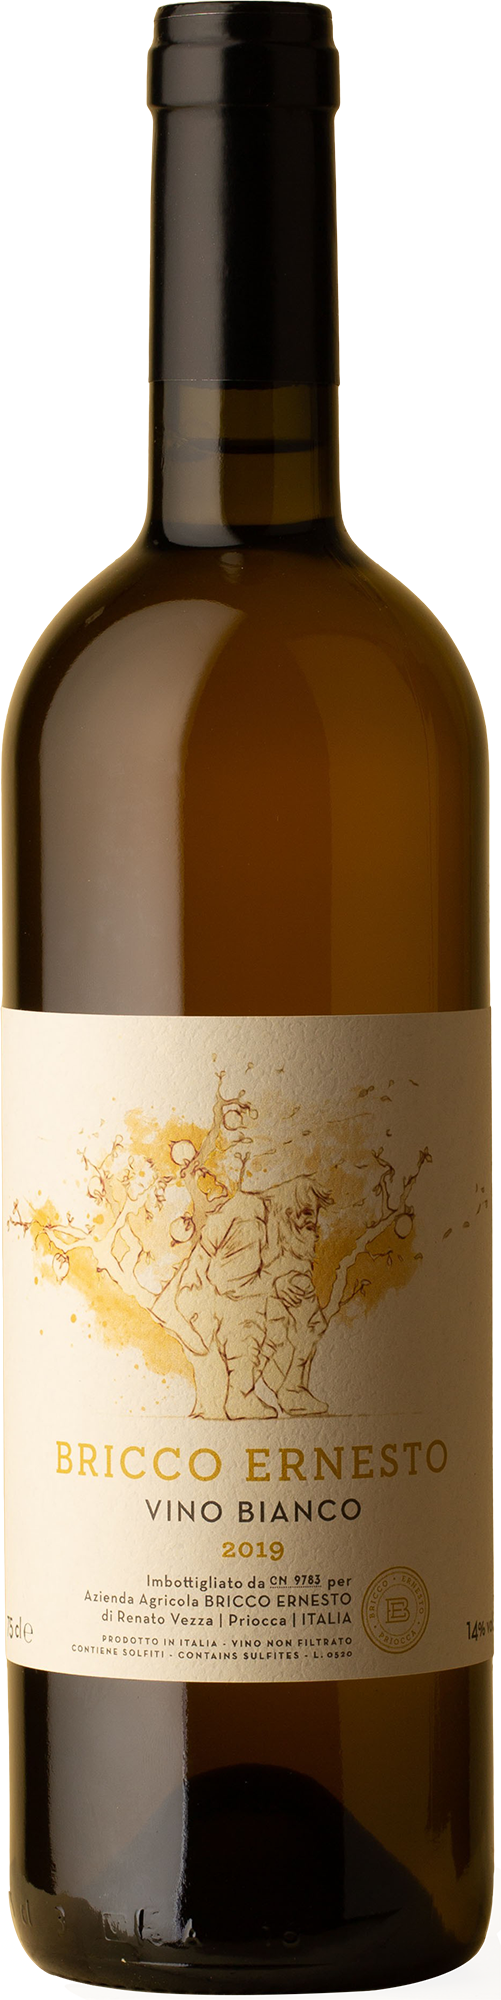 Bricco Ernesto - Vino Bianco Arneis 2019 Orange Wine